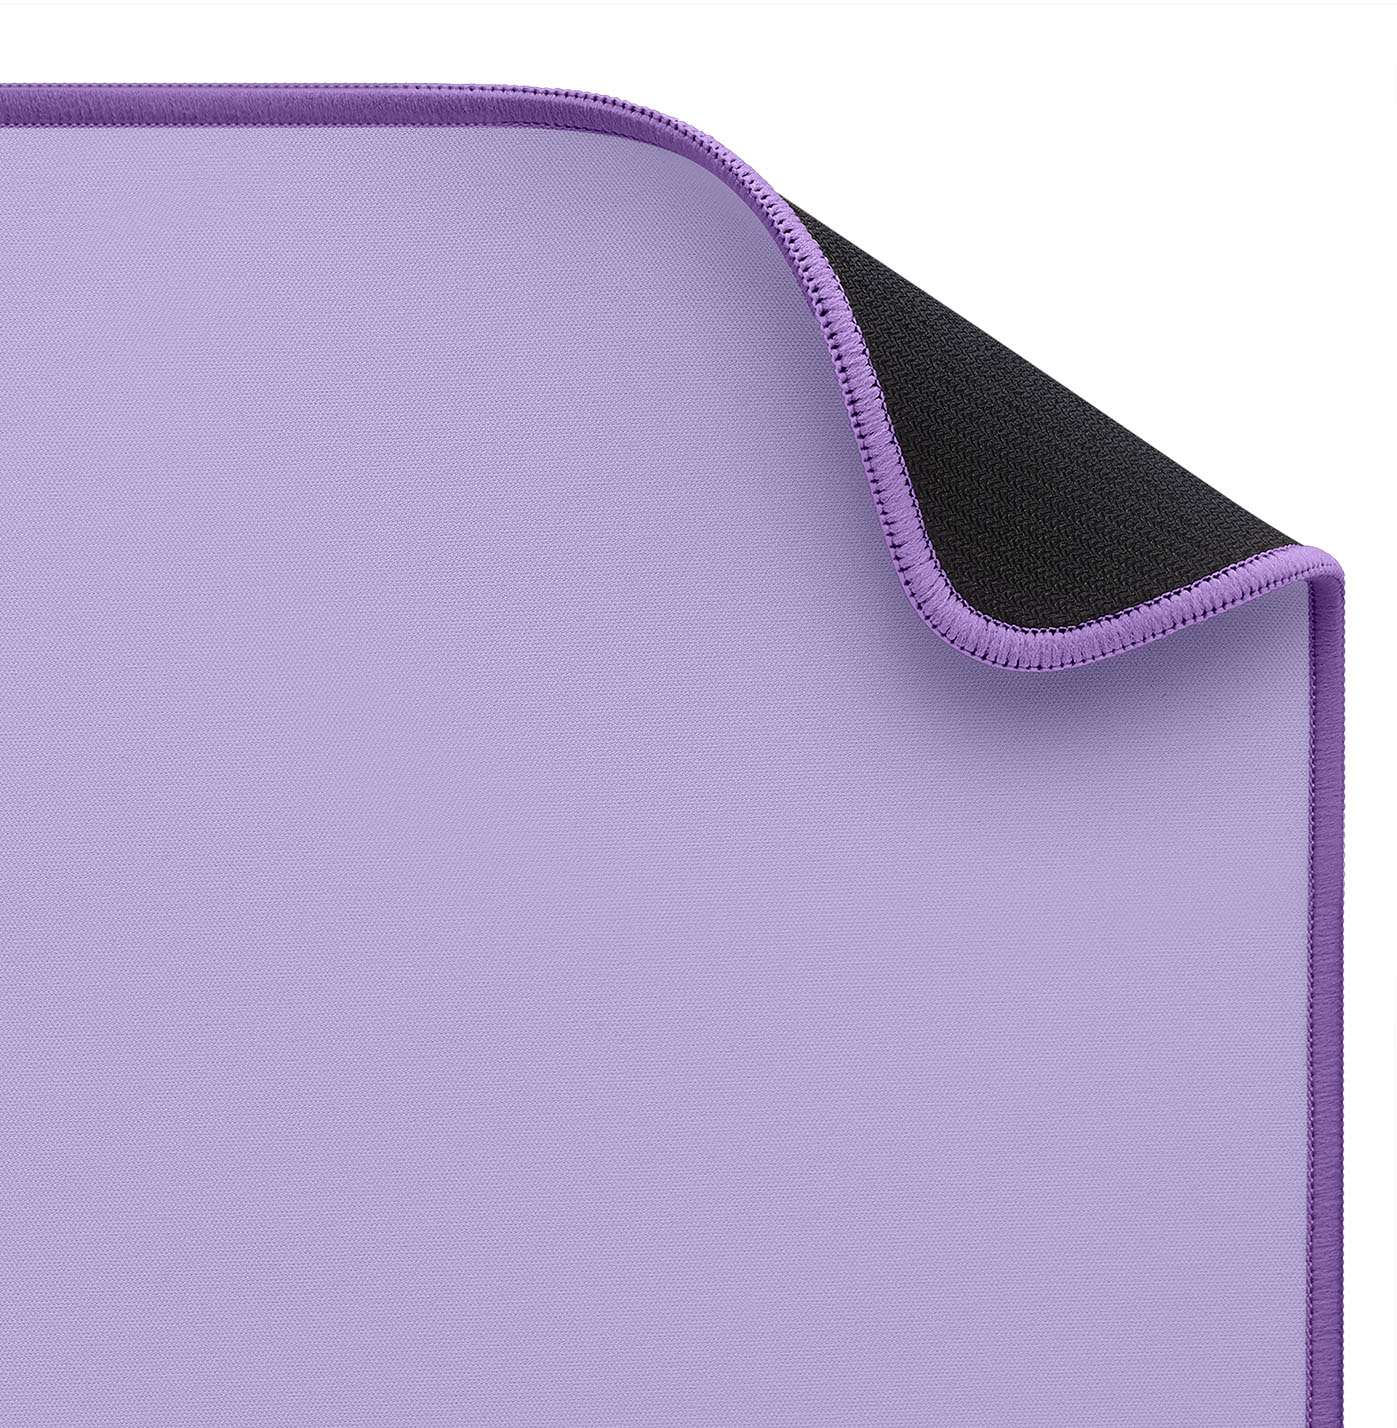 folder Mindre meget fint Logitech Desk Mat Studio Series Extended Mouse Pad with Spill-resistant  Durable Design (Large) Lavender 956-000036 - Best Buy